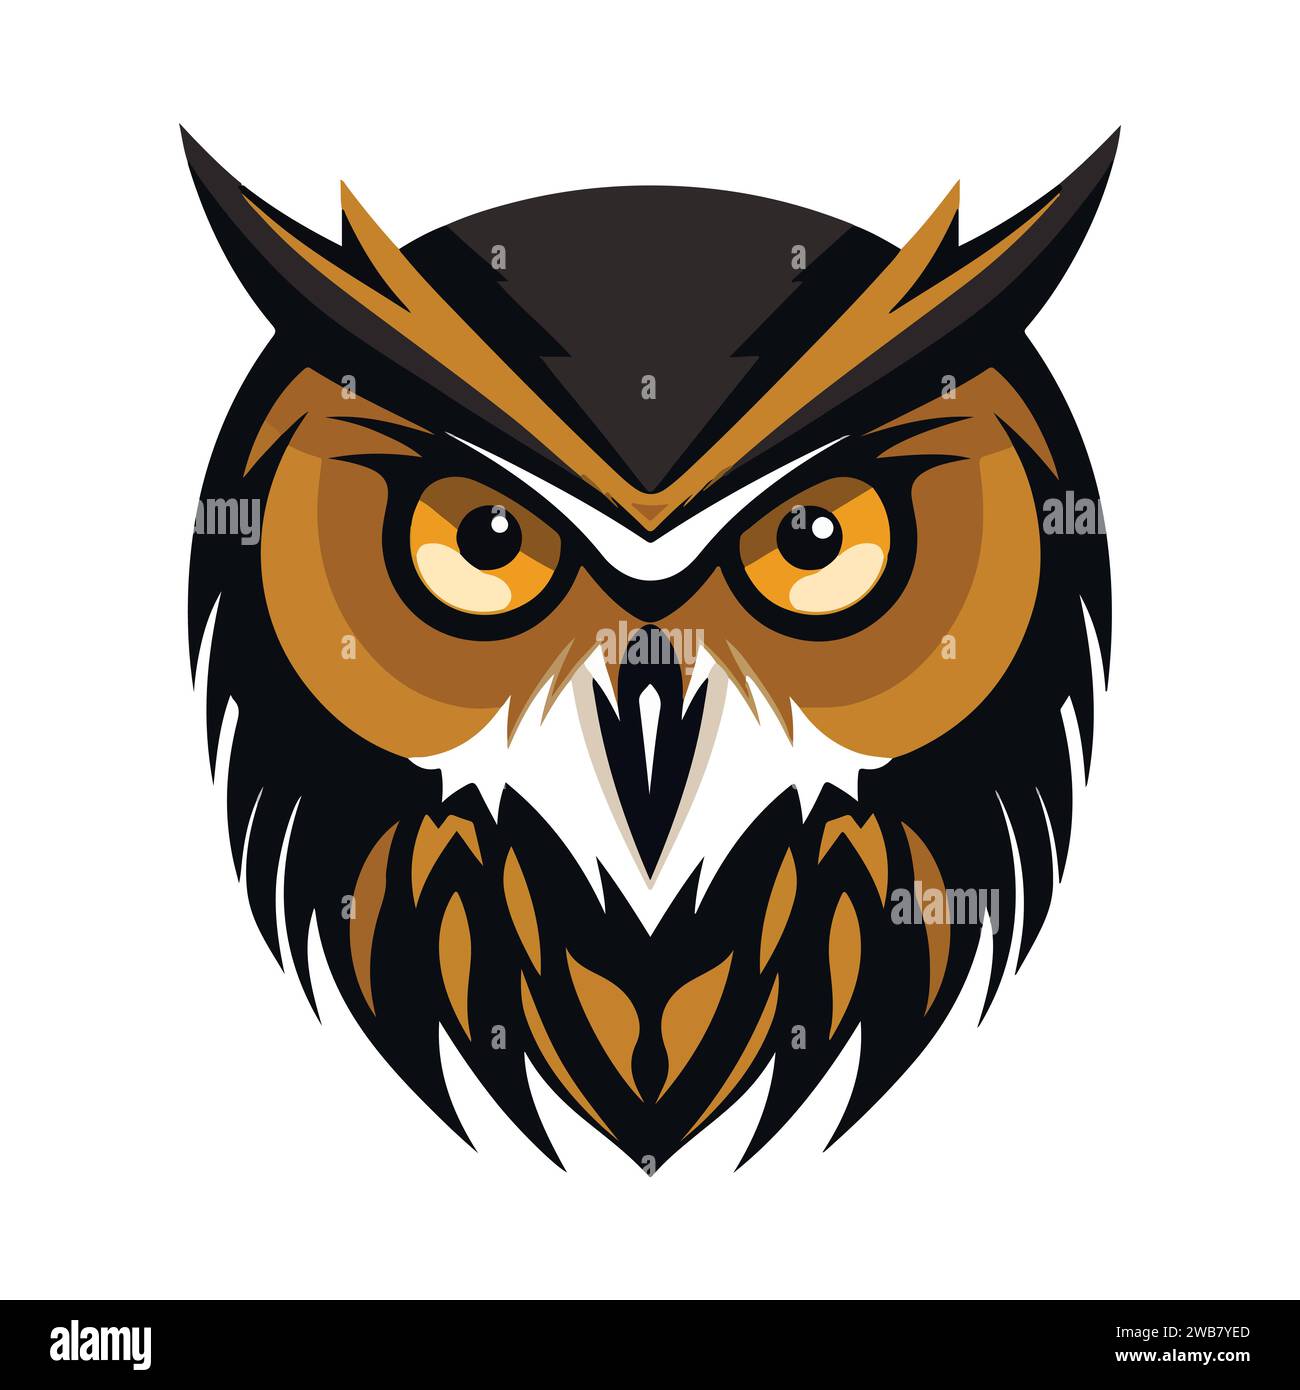 Bird Nerd Graphic T-Shirt — Raptor Education Group, Inc.